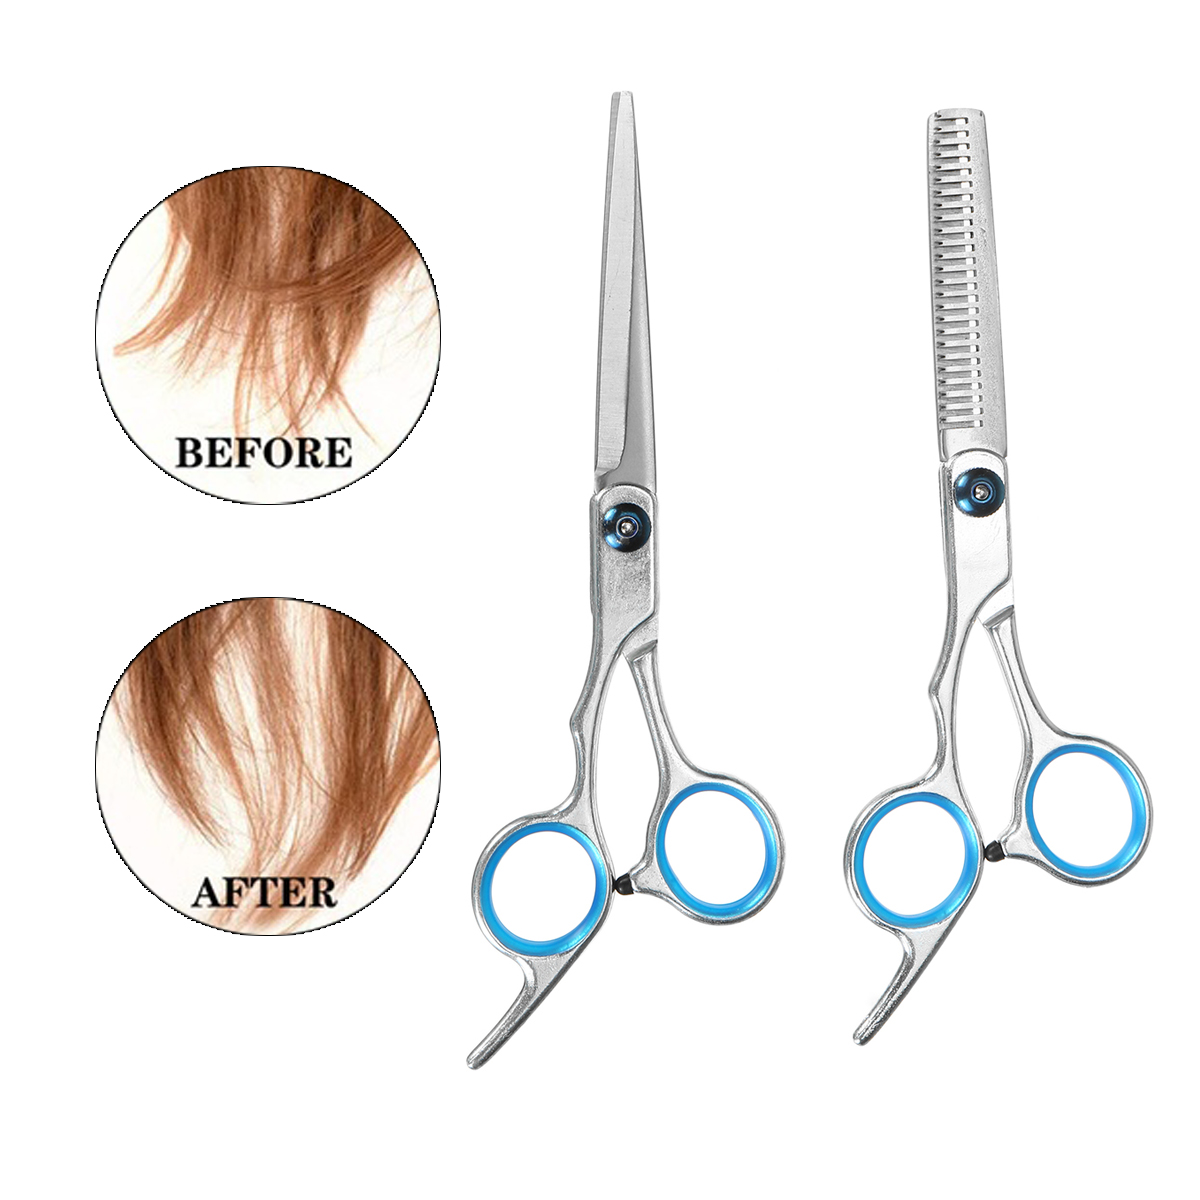 10PCS Barber Hair Cutting Thinning Scissors Shears Set Salon Hair Trimmer Pro Hairdressing Tool